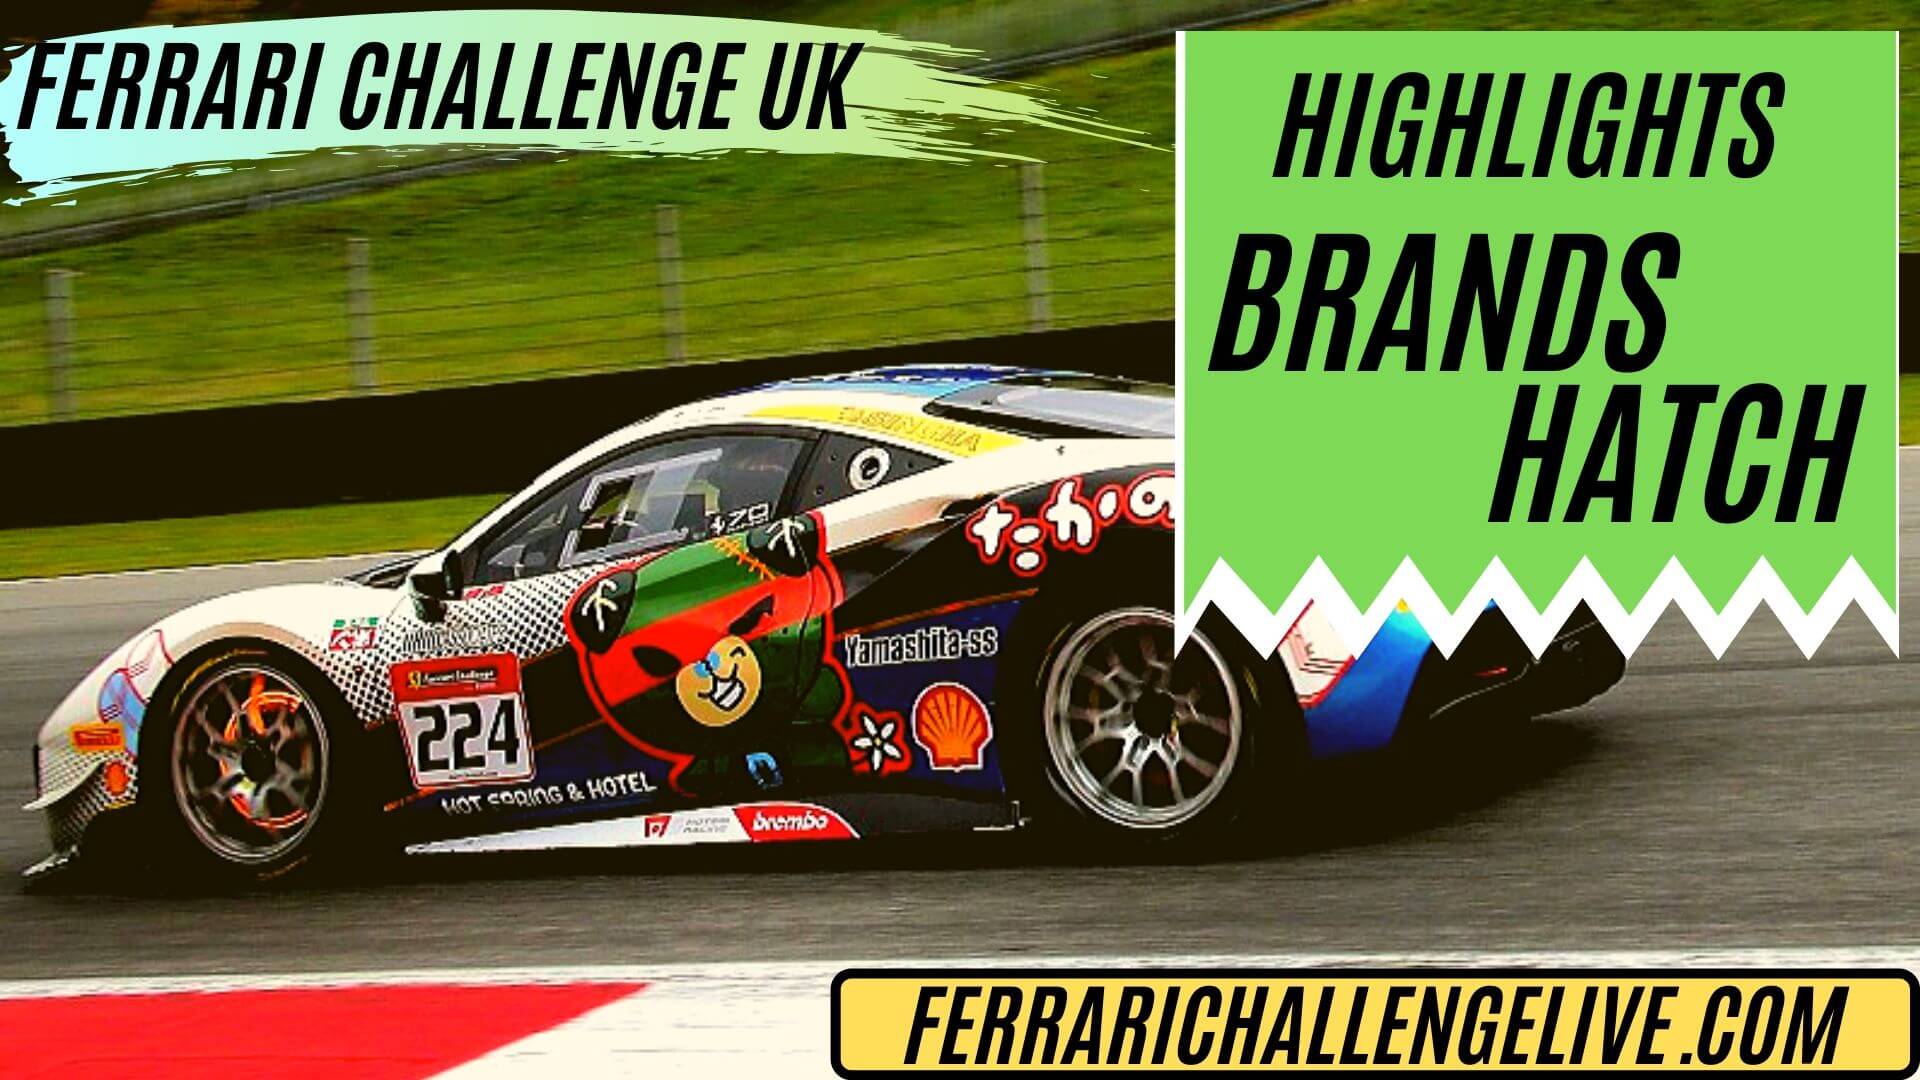 Brands Hatch Ferrari Challenge UK Highlights 2019